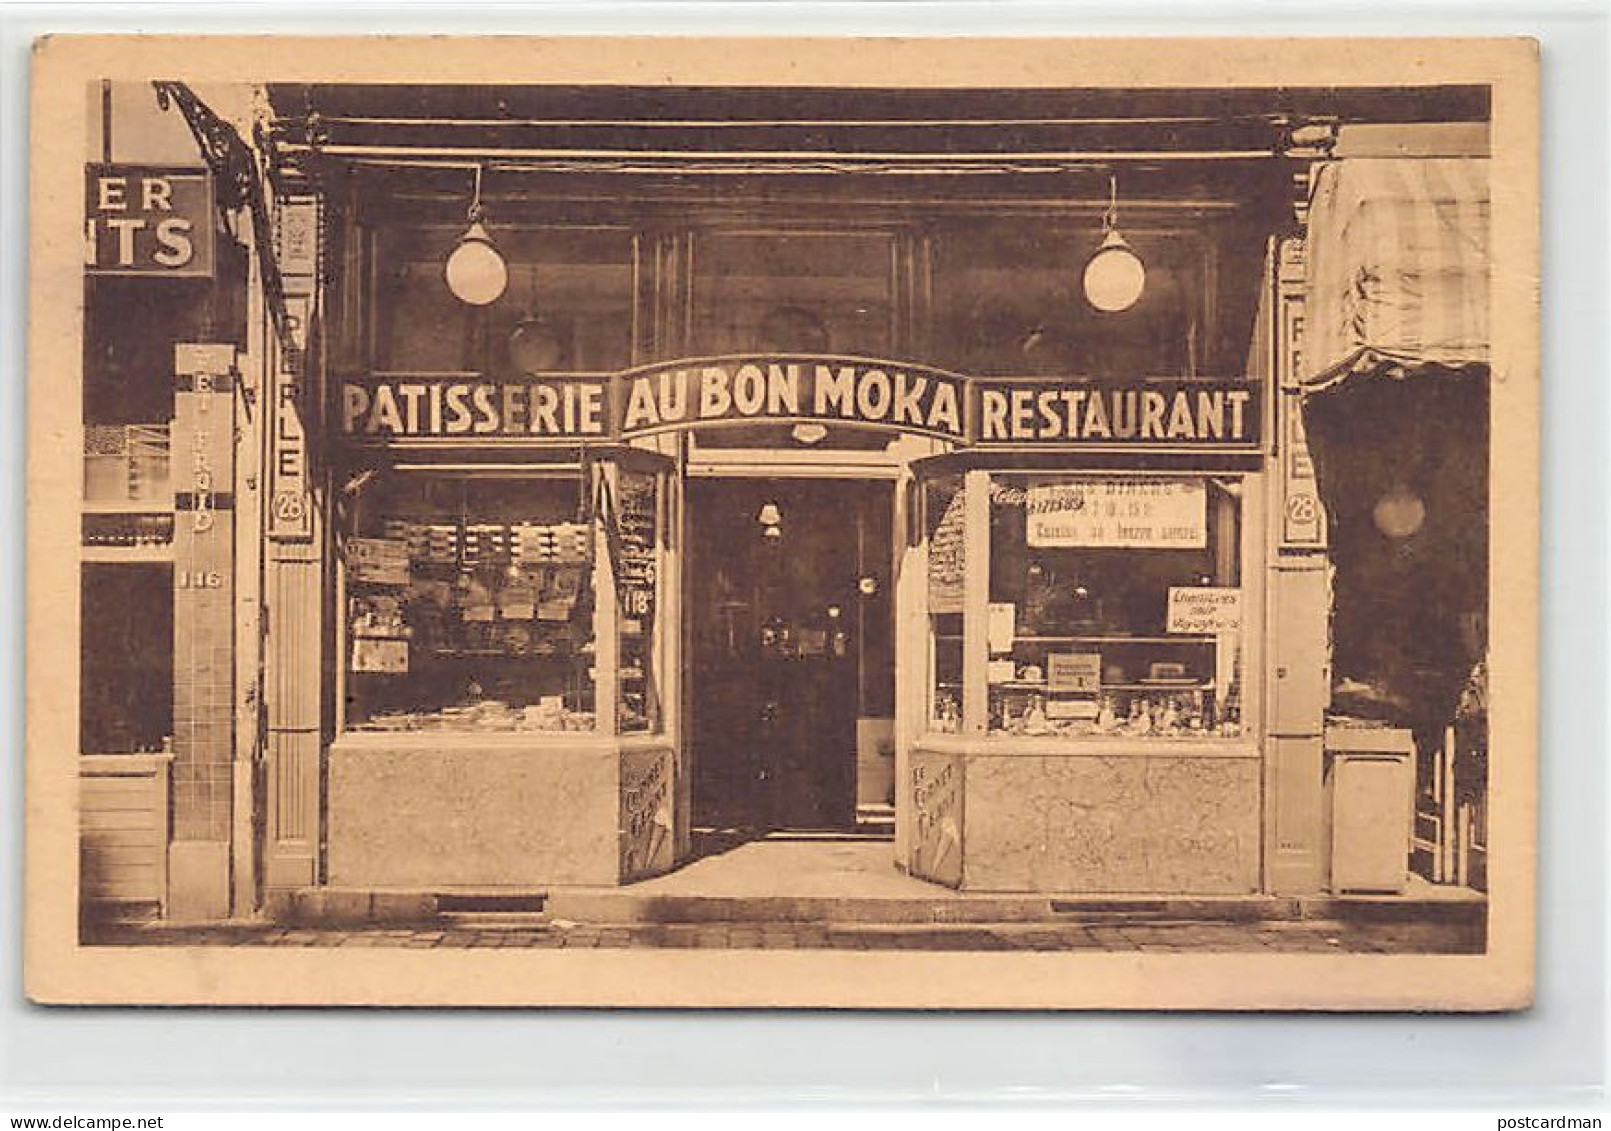 BRUXELLES - Au Bon Moka - Pâtisserie Restaurant - 118 Rue Neuve - Cafés, Hôtels, Restaurants